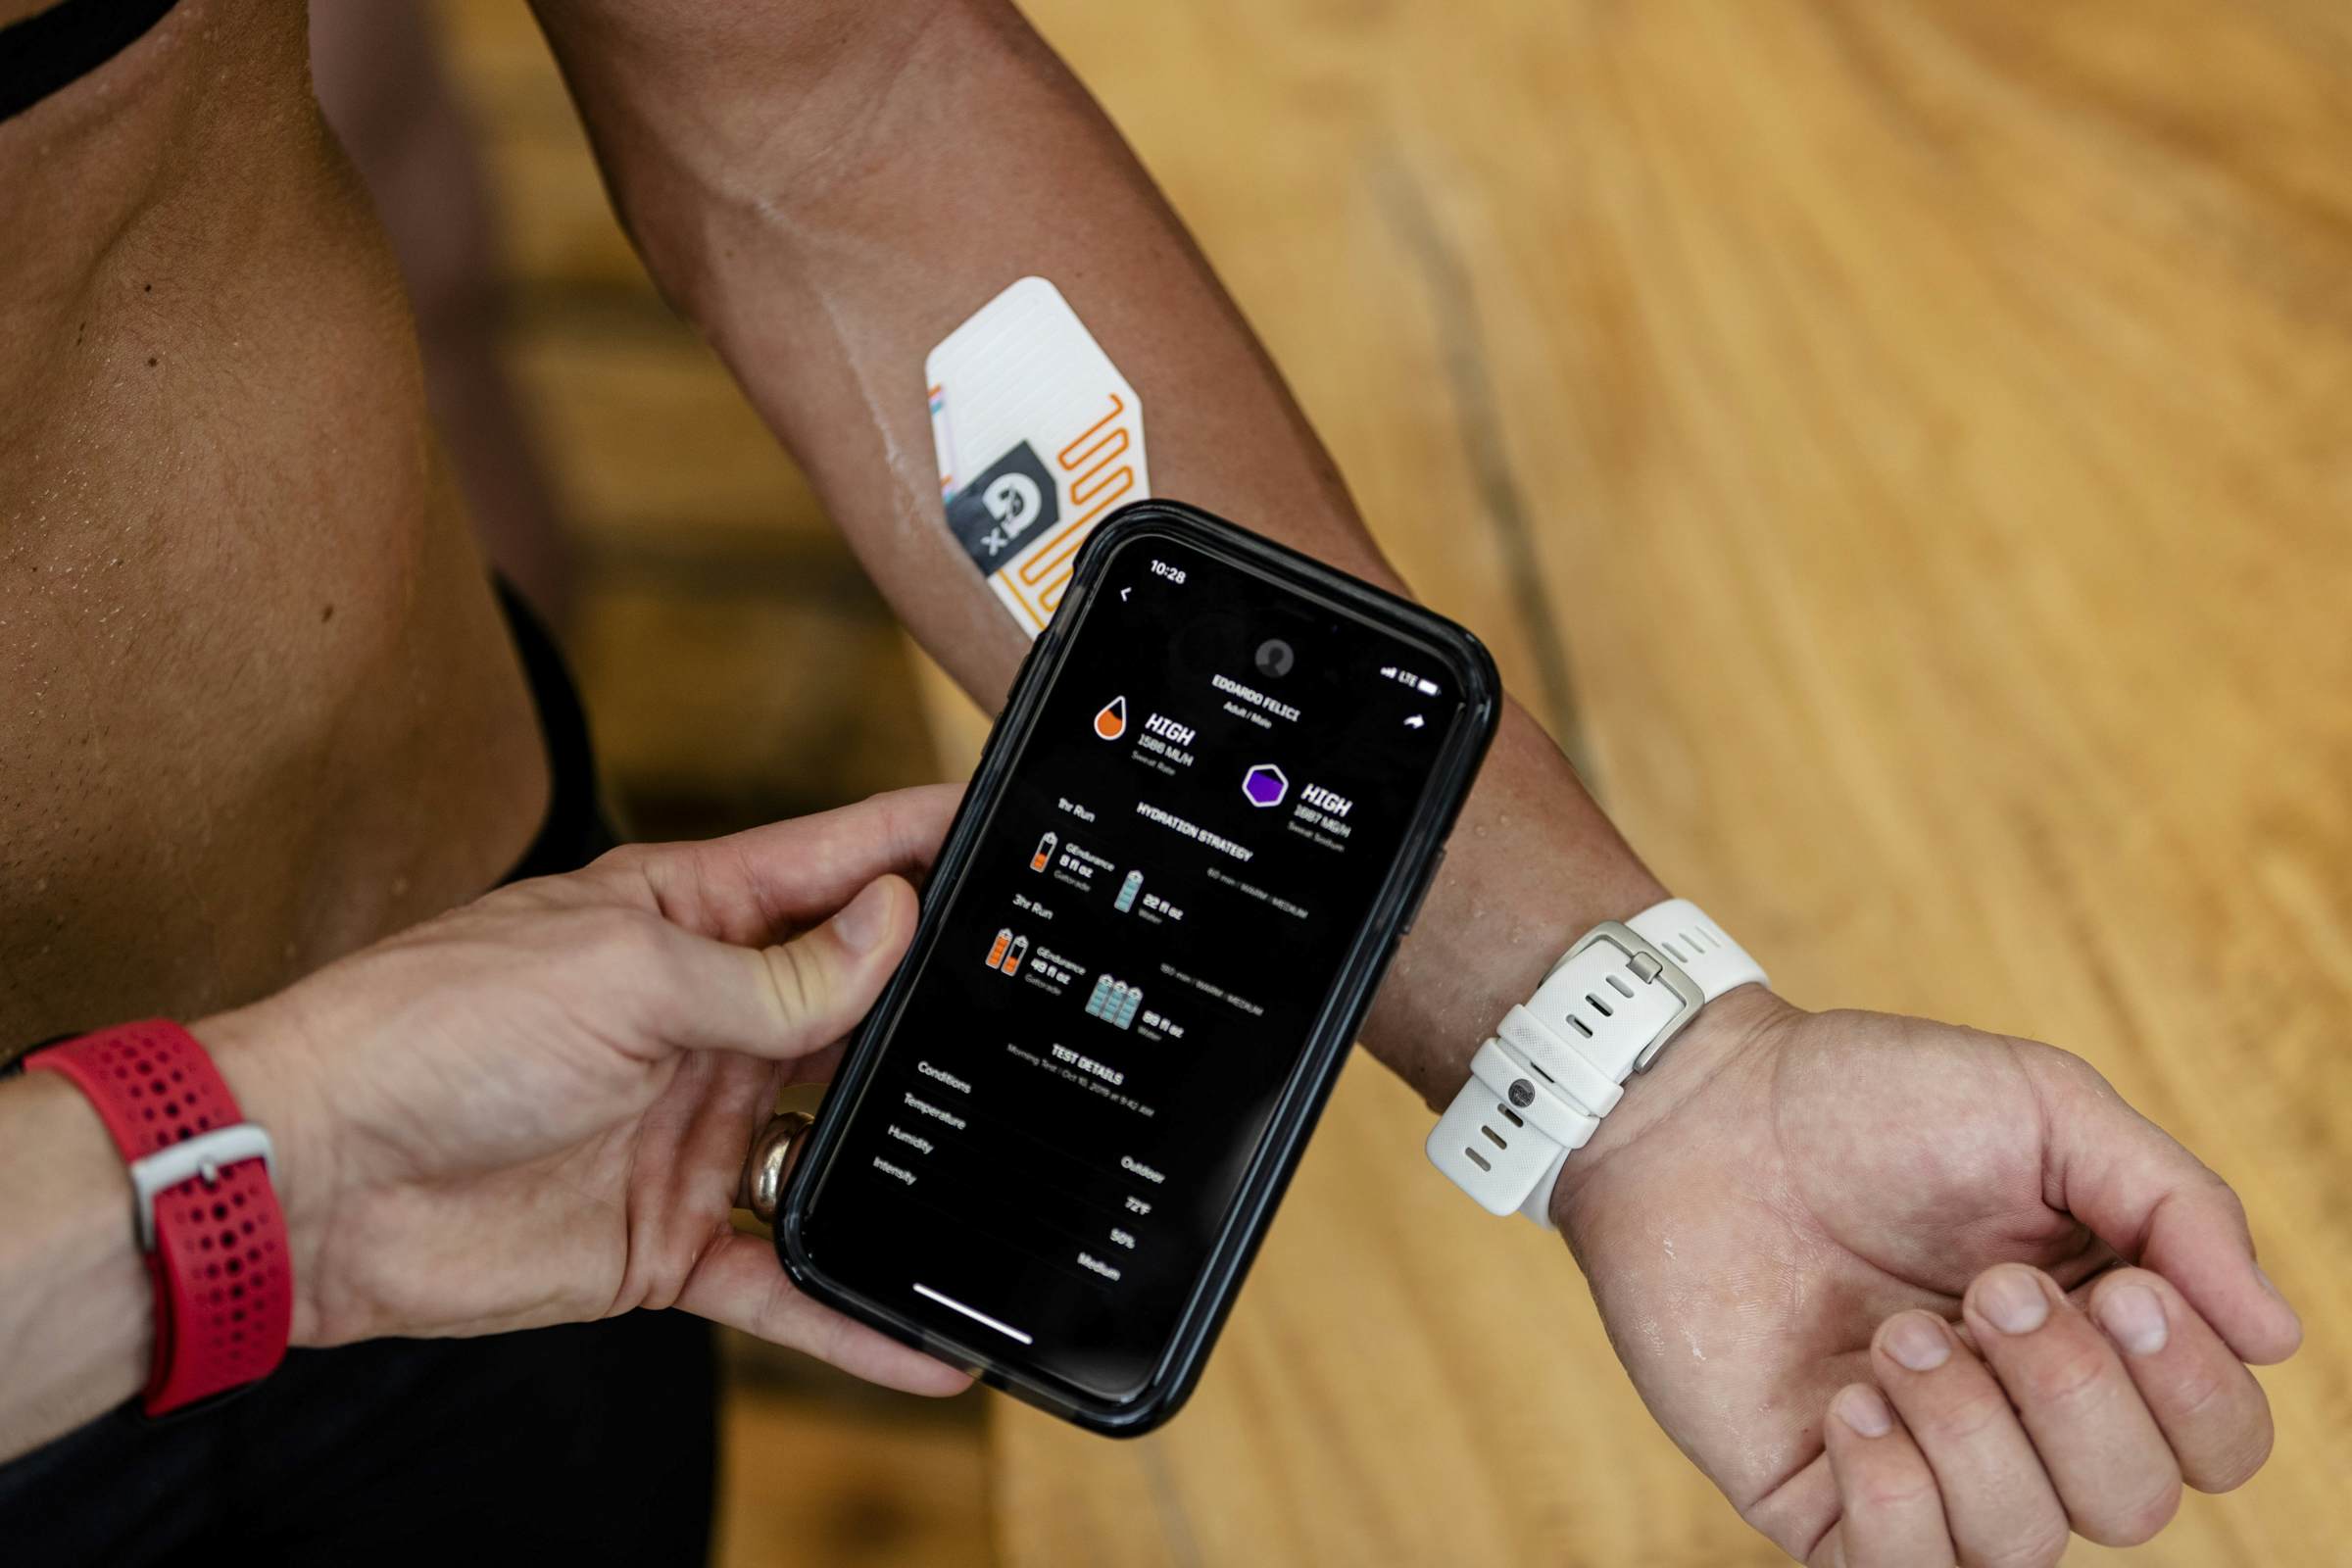 iphone scanning wrist band